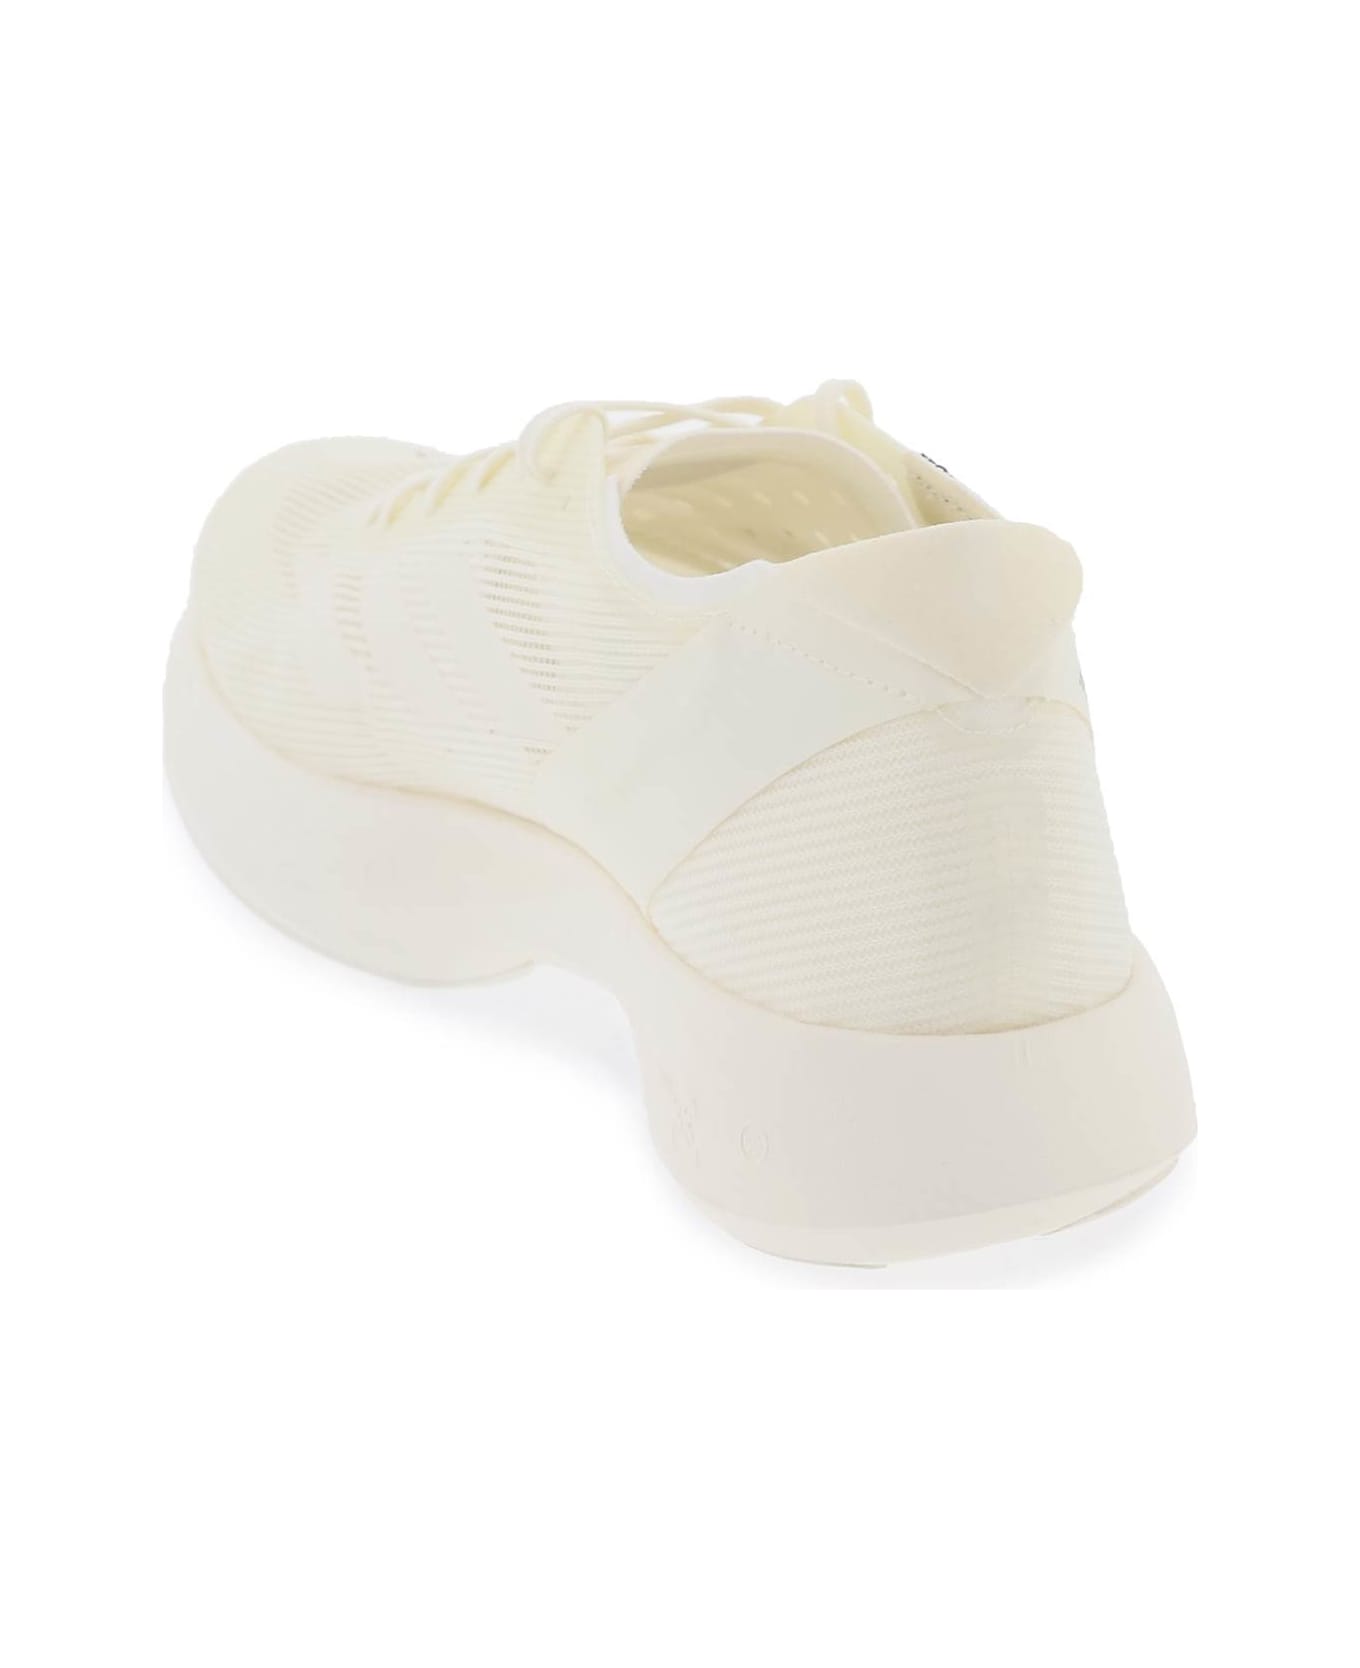 Y-3 'takumi Sen 10' White Fabric Sneakers - Ivory スニーカー